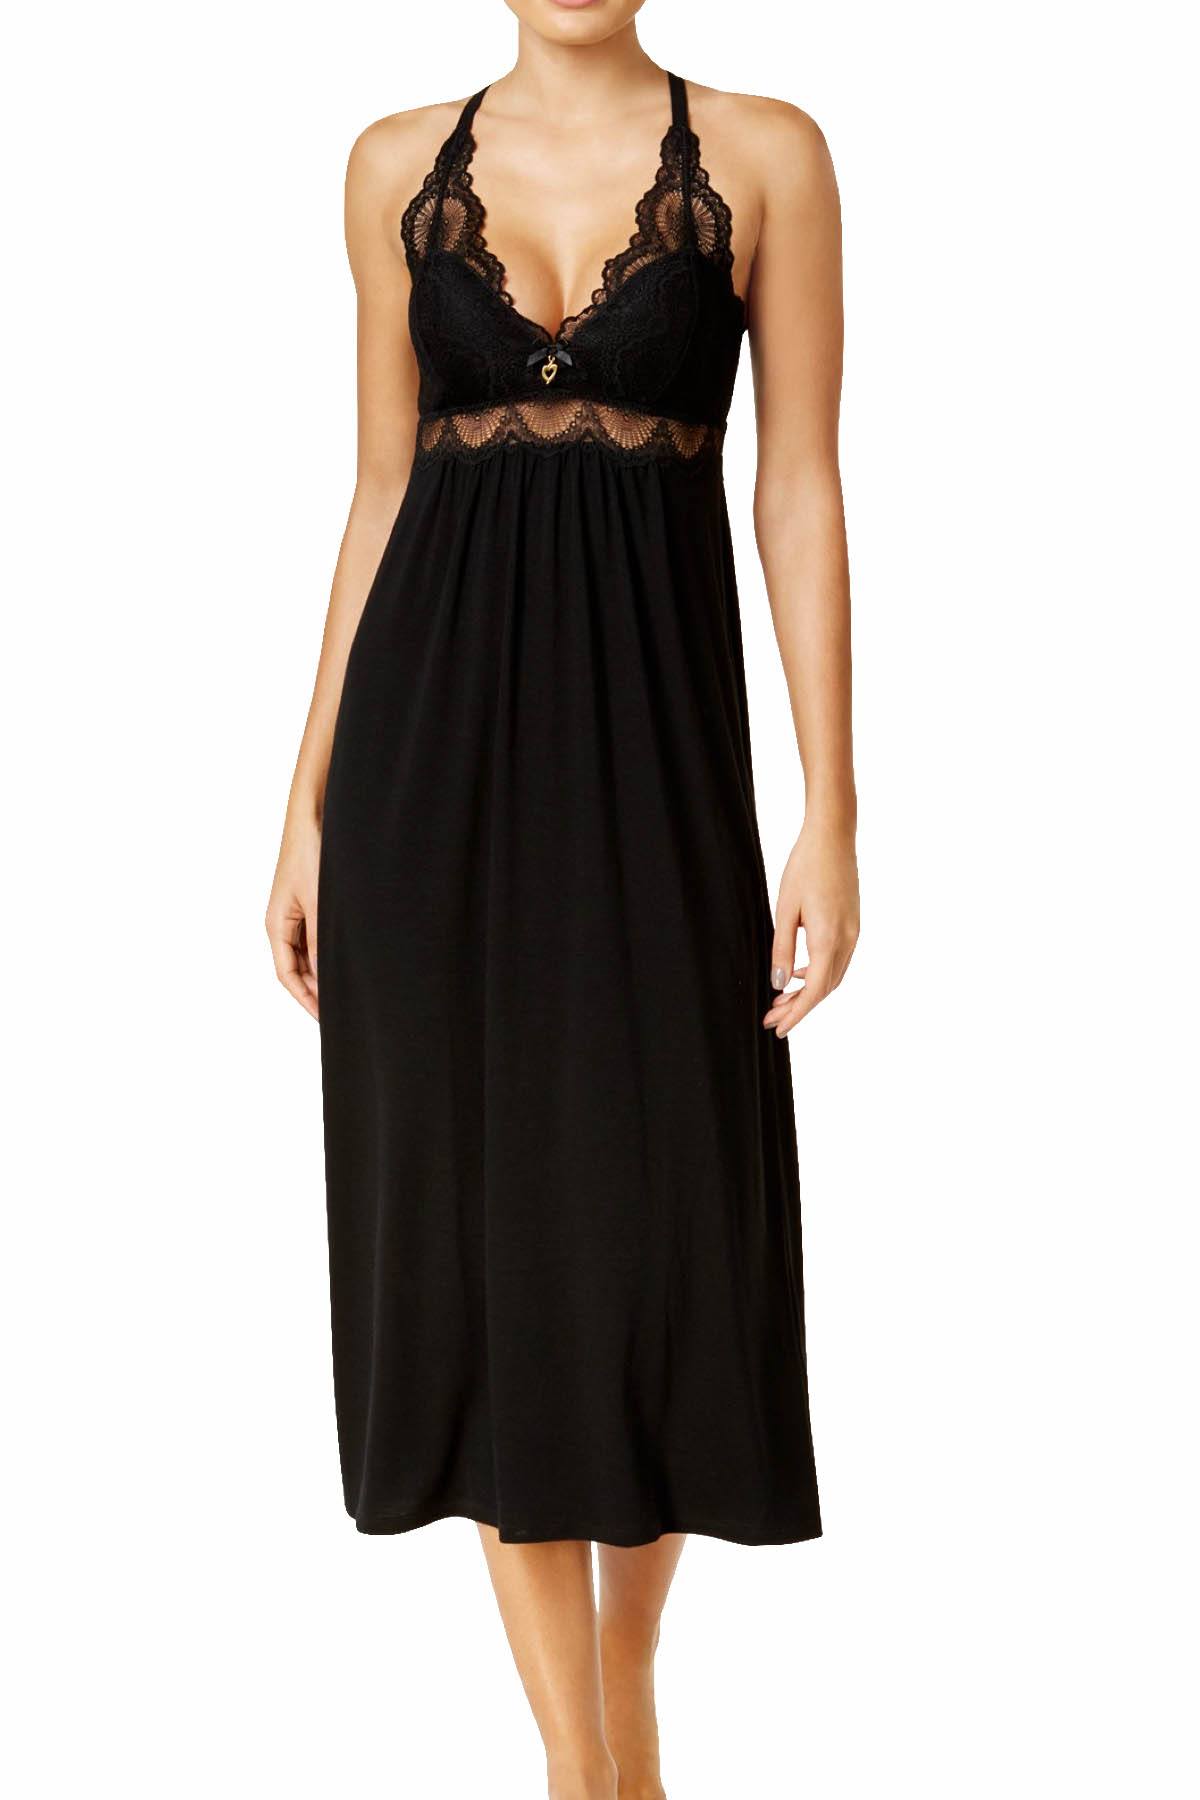 Thalia Sodi Intimates Black Lace-Trimmed Knit Nightgown